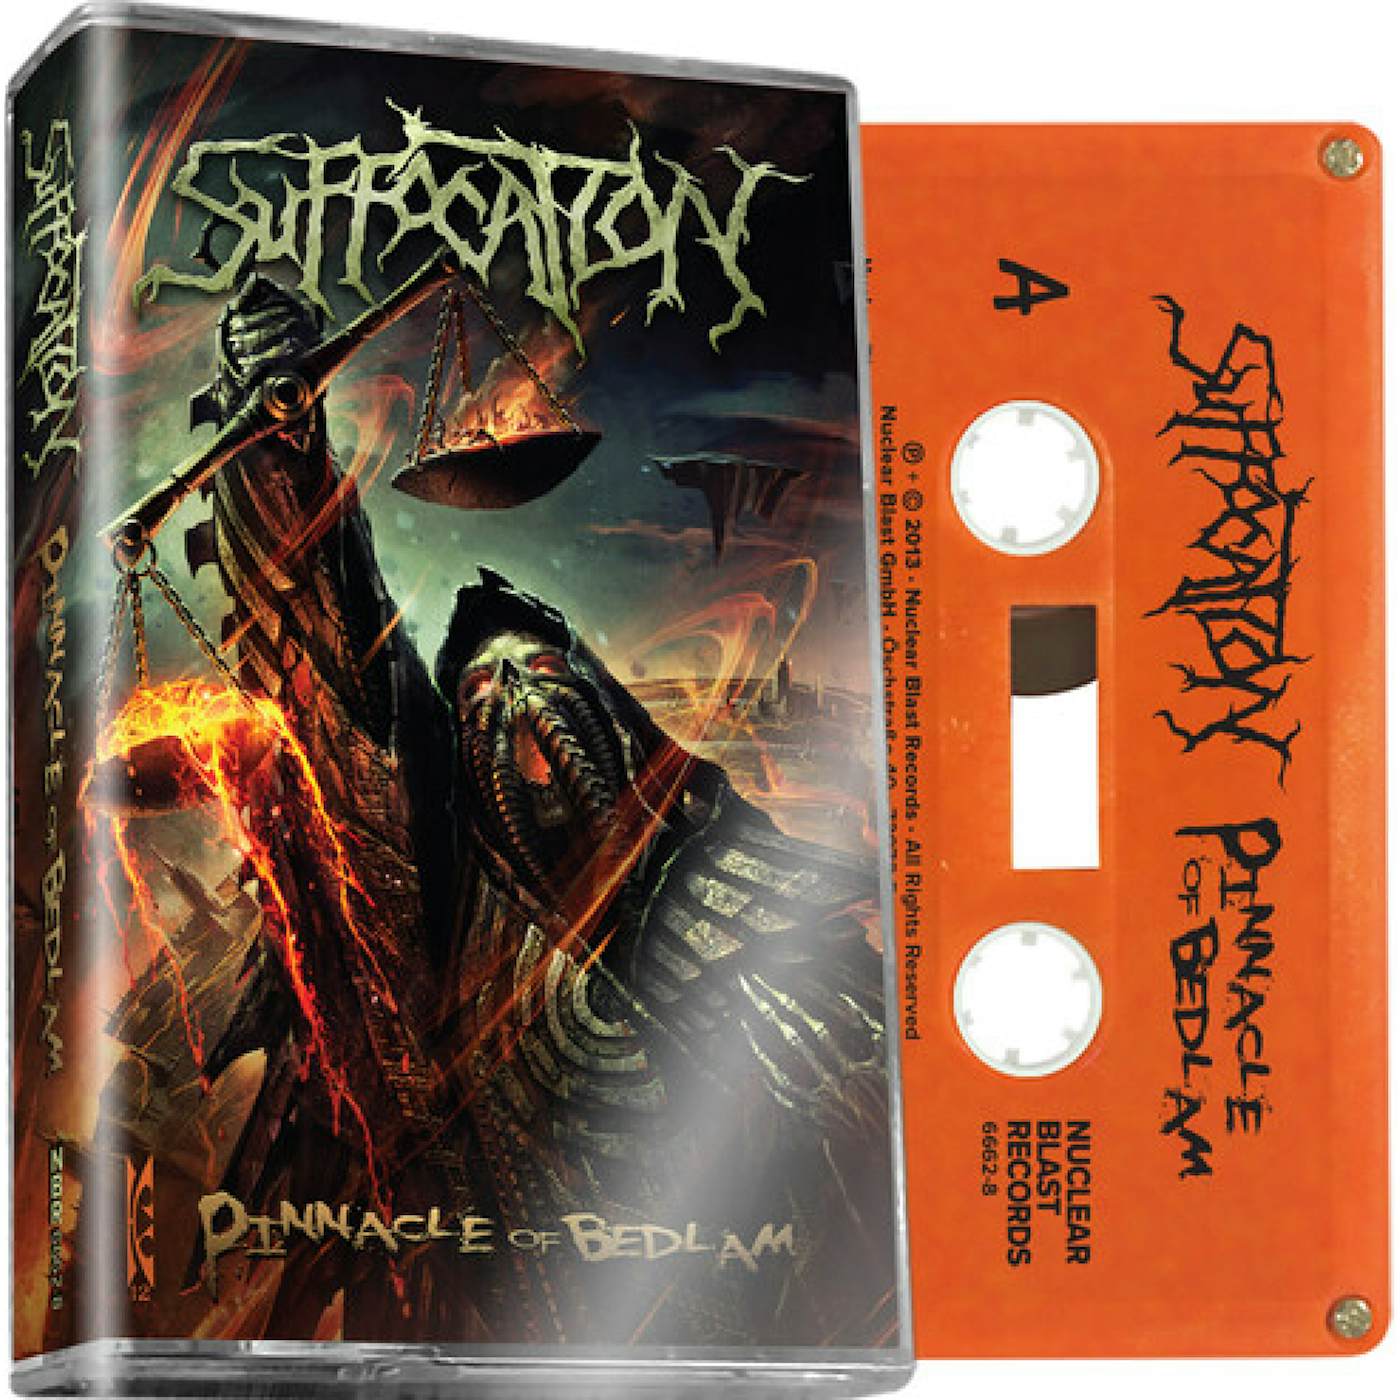 Suffocation "Pinnacle Of Bedlam" Cassette